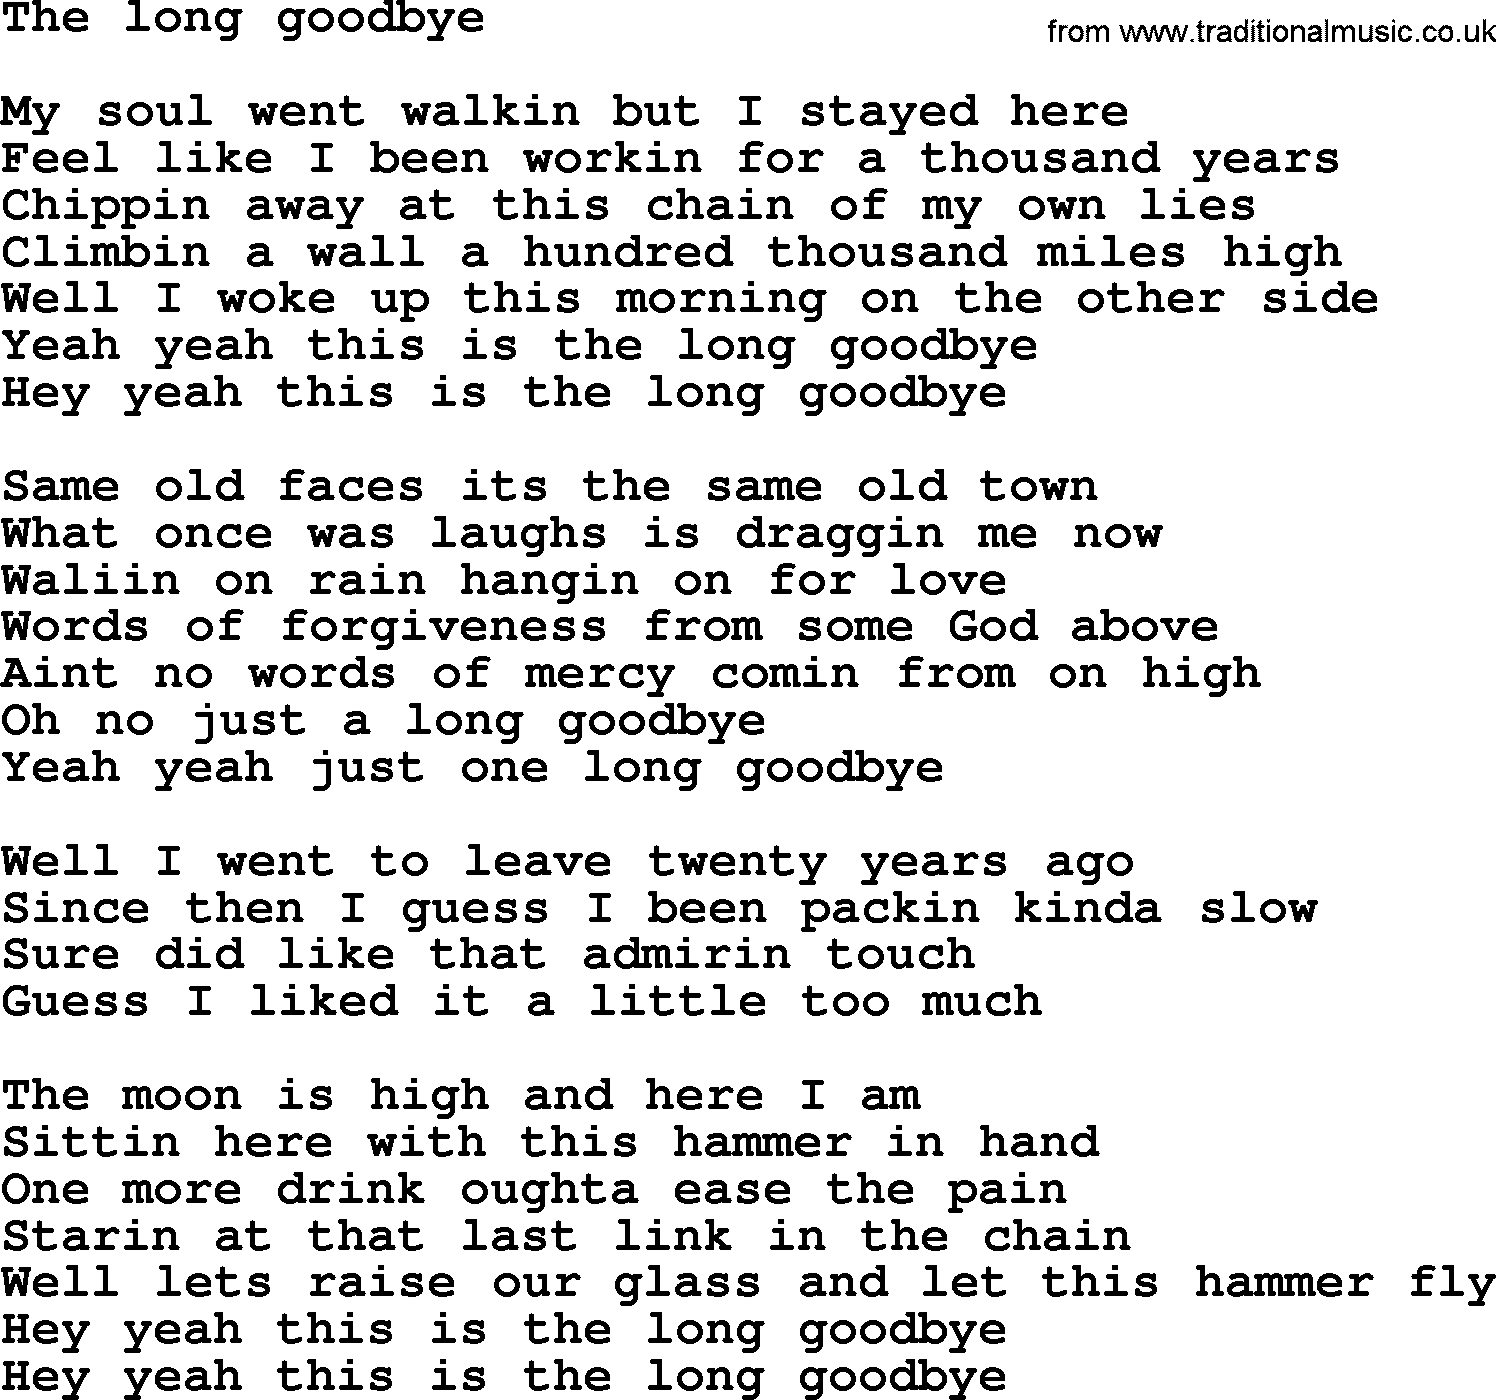 Bruce Springsteen song: The Long Goodbye lyrics